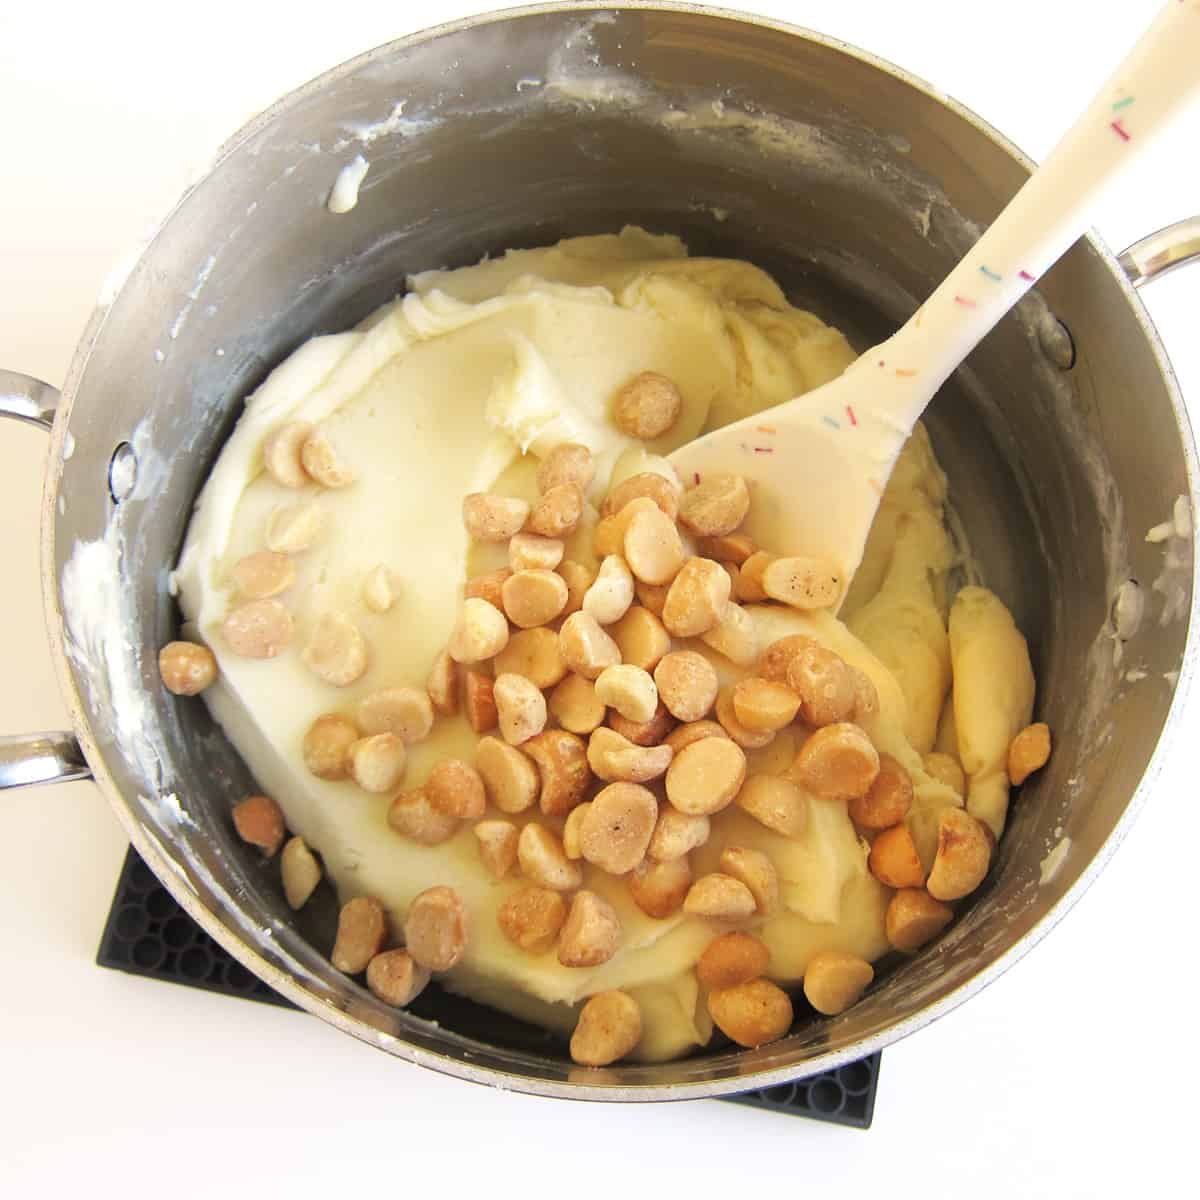 Stir macadamia nuts poured into white chocolate fudge.